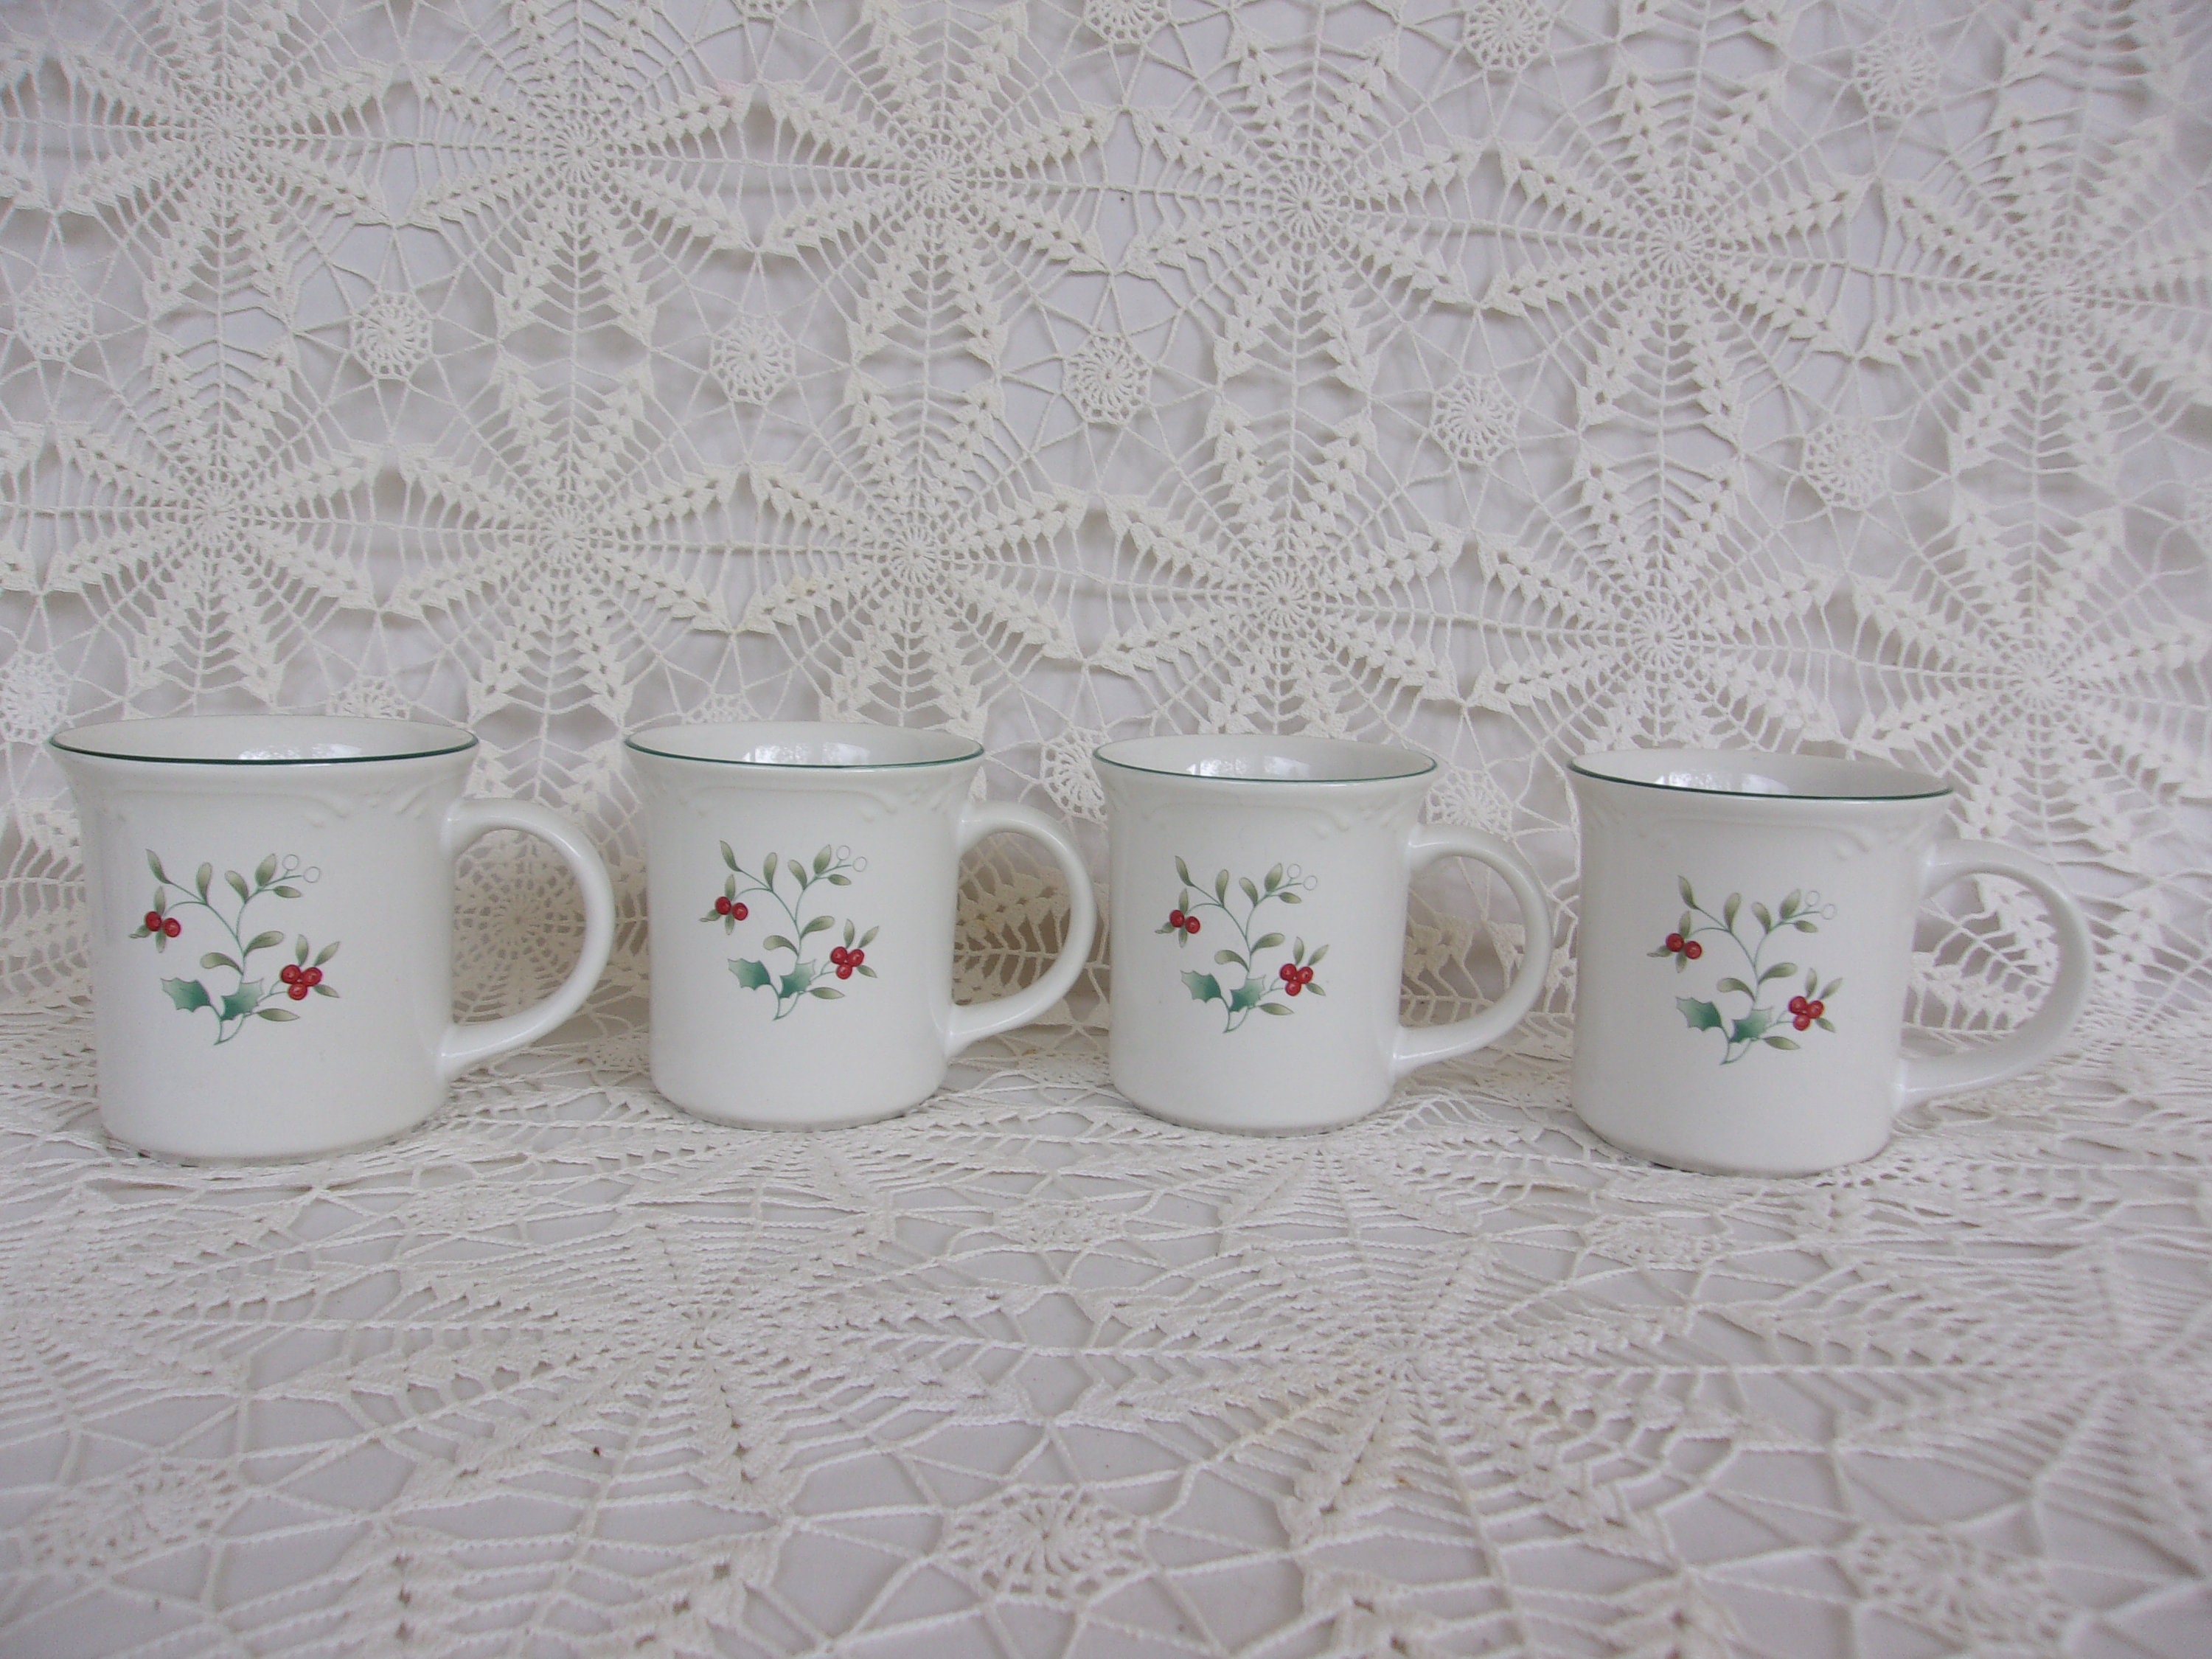 Winterberry Holly Handmade Ceramic Coffee Mug - An Elegant 10 oz Espresso  Cup for Holiday Season – Enjoy Ceramic Art